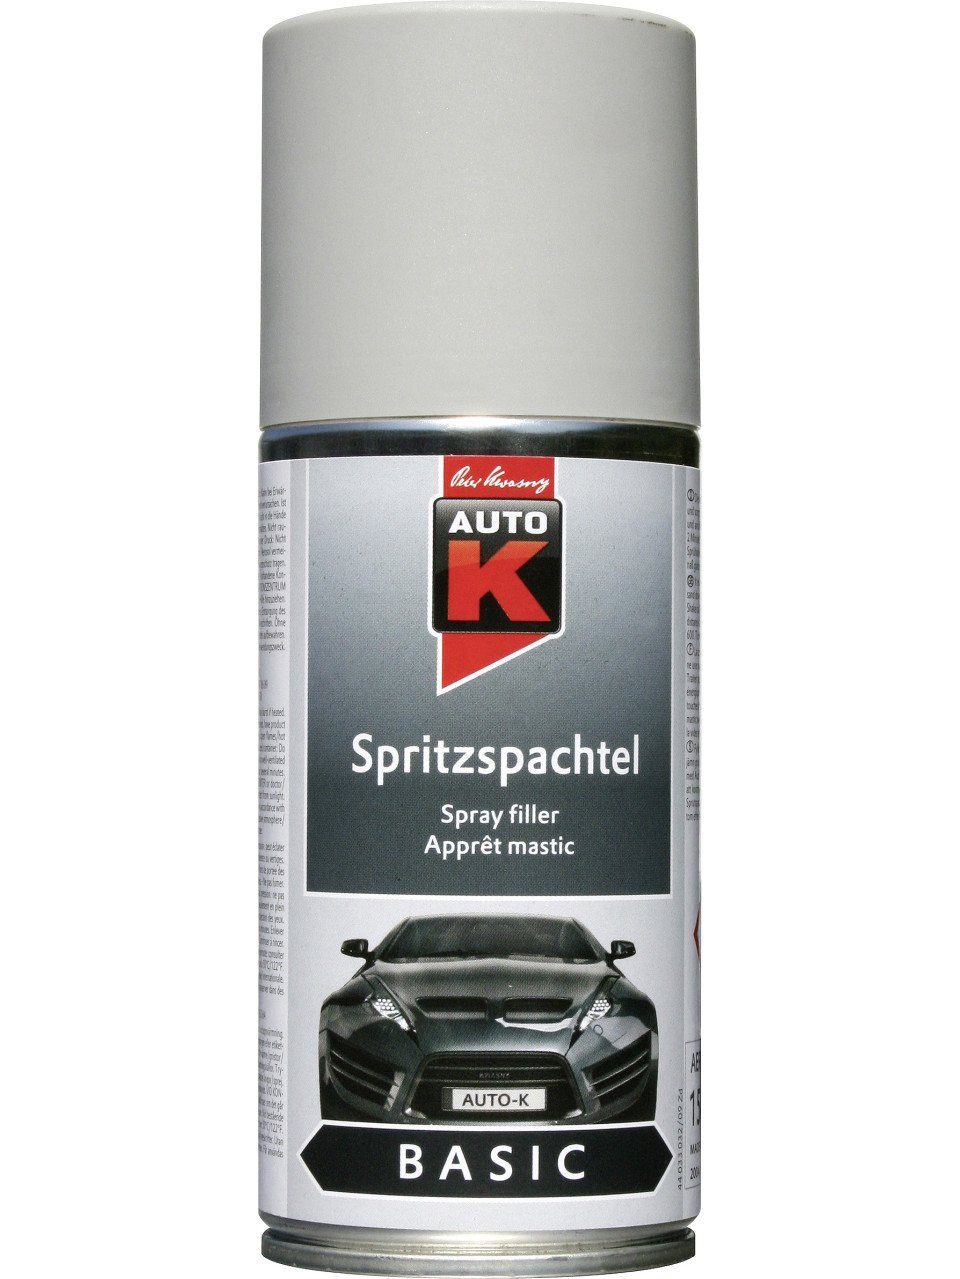 Auto-K Breitspachtel Auto-K Spritzspachtel 150ml grau Basic